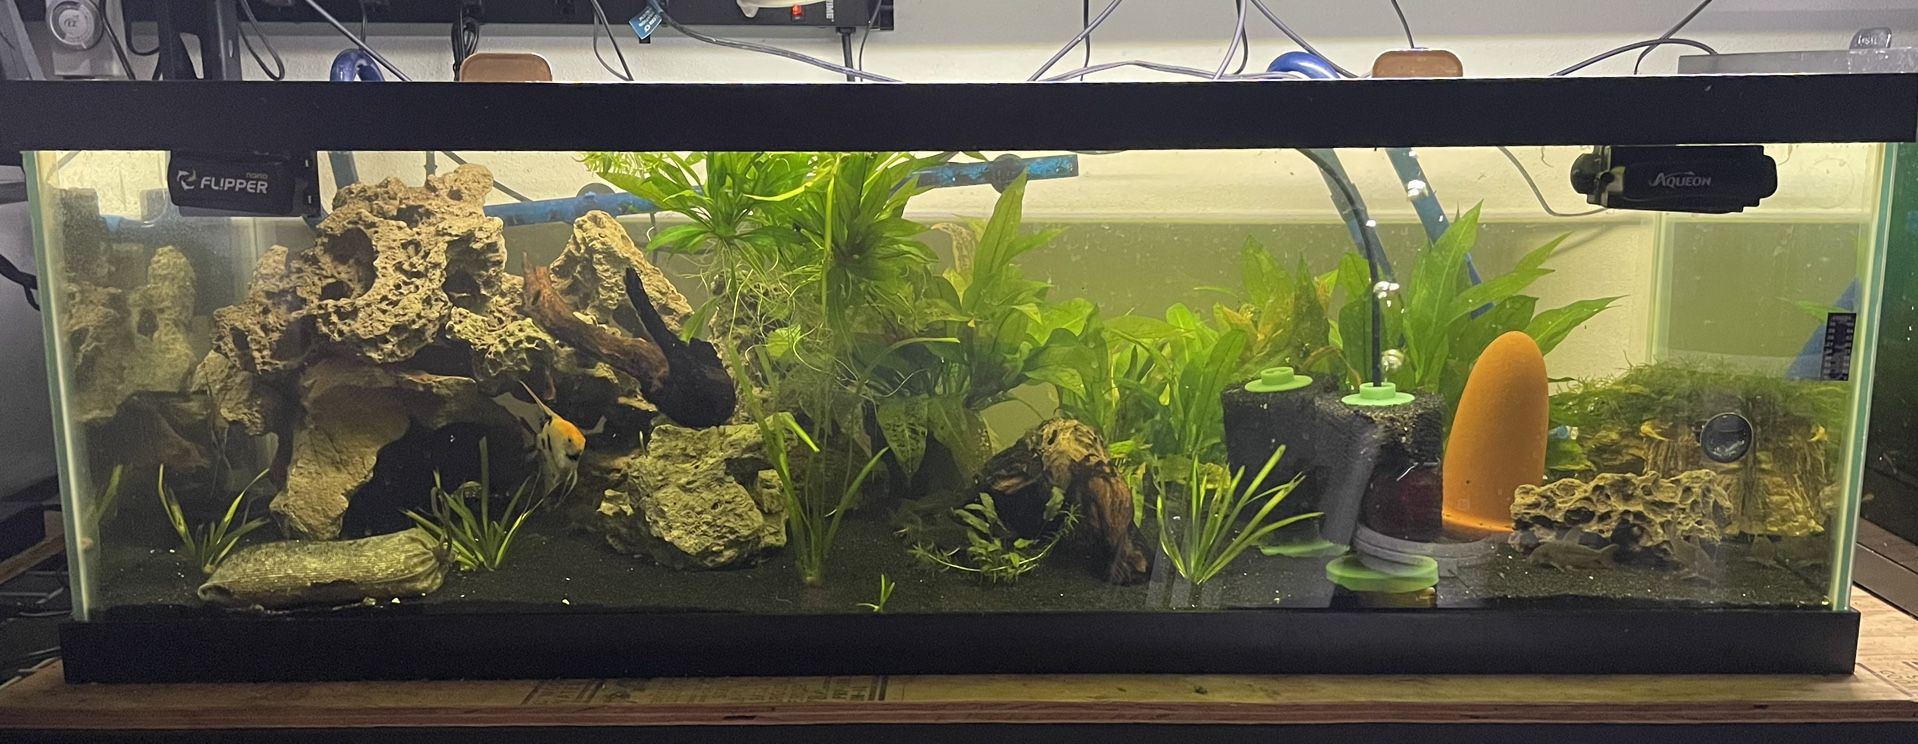 Aqueon 60g Breeder Fish Tank Aquarium Kit